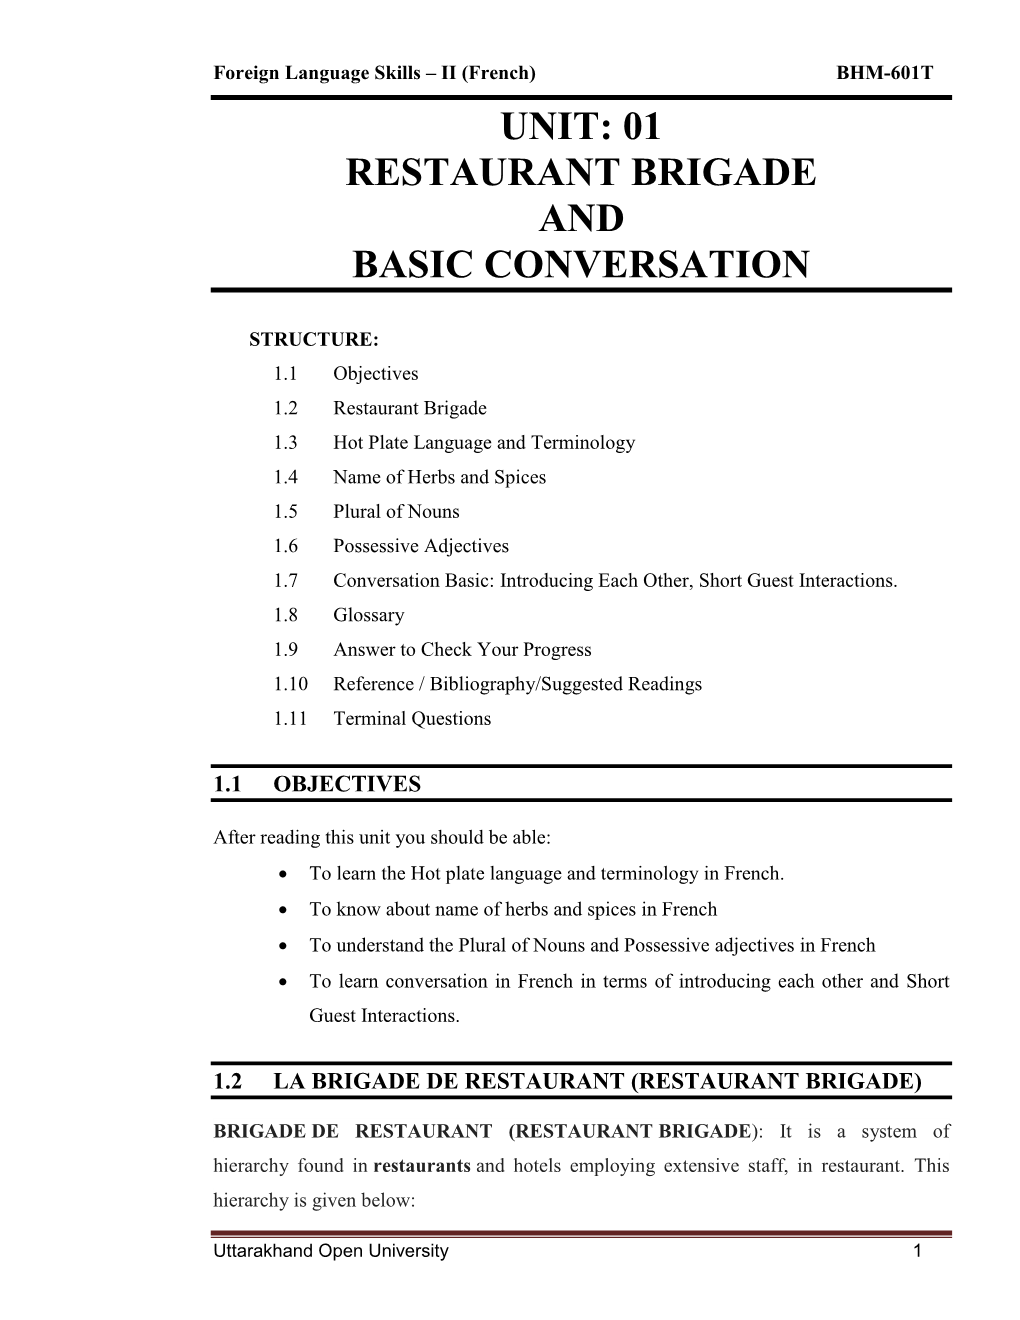 01 Restaurant Brigade and Basic Conversation